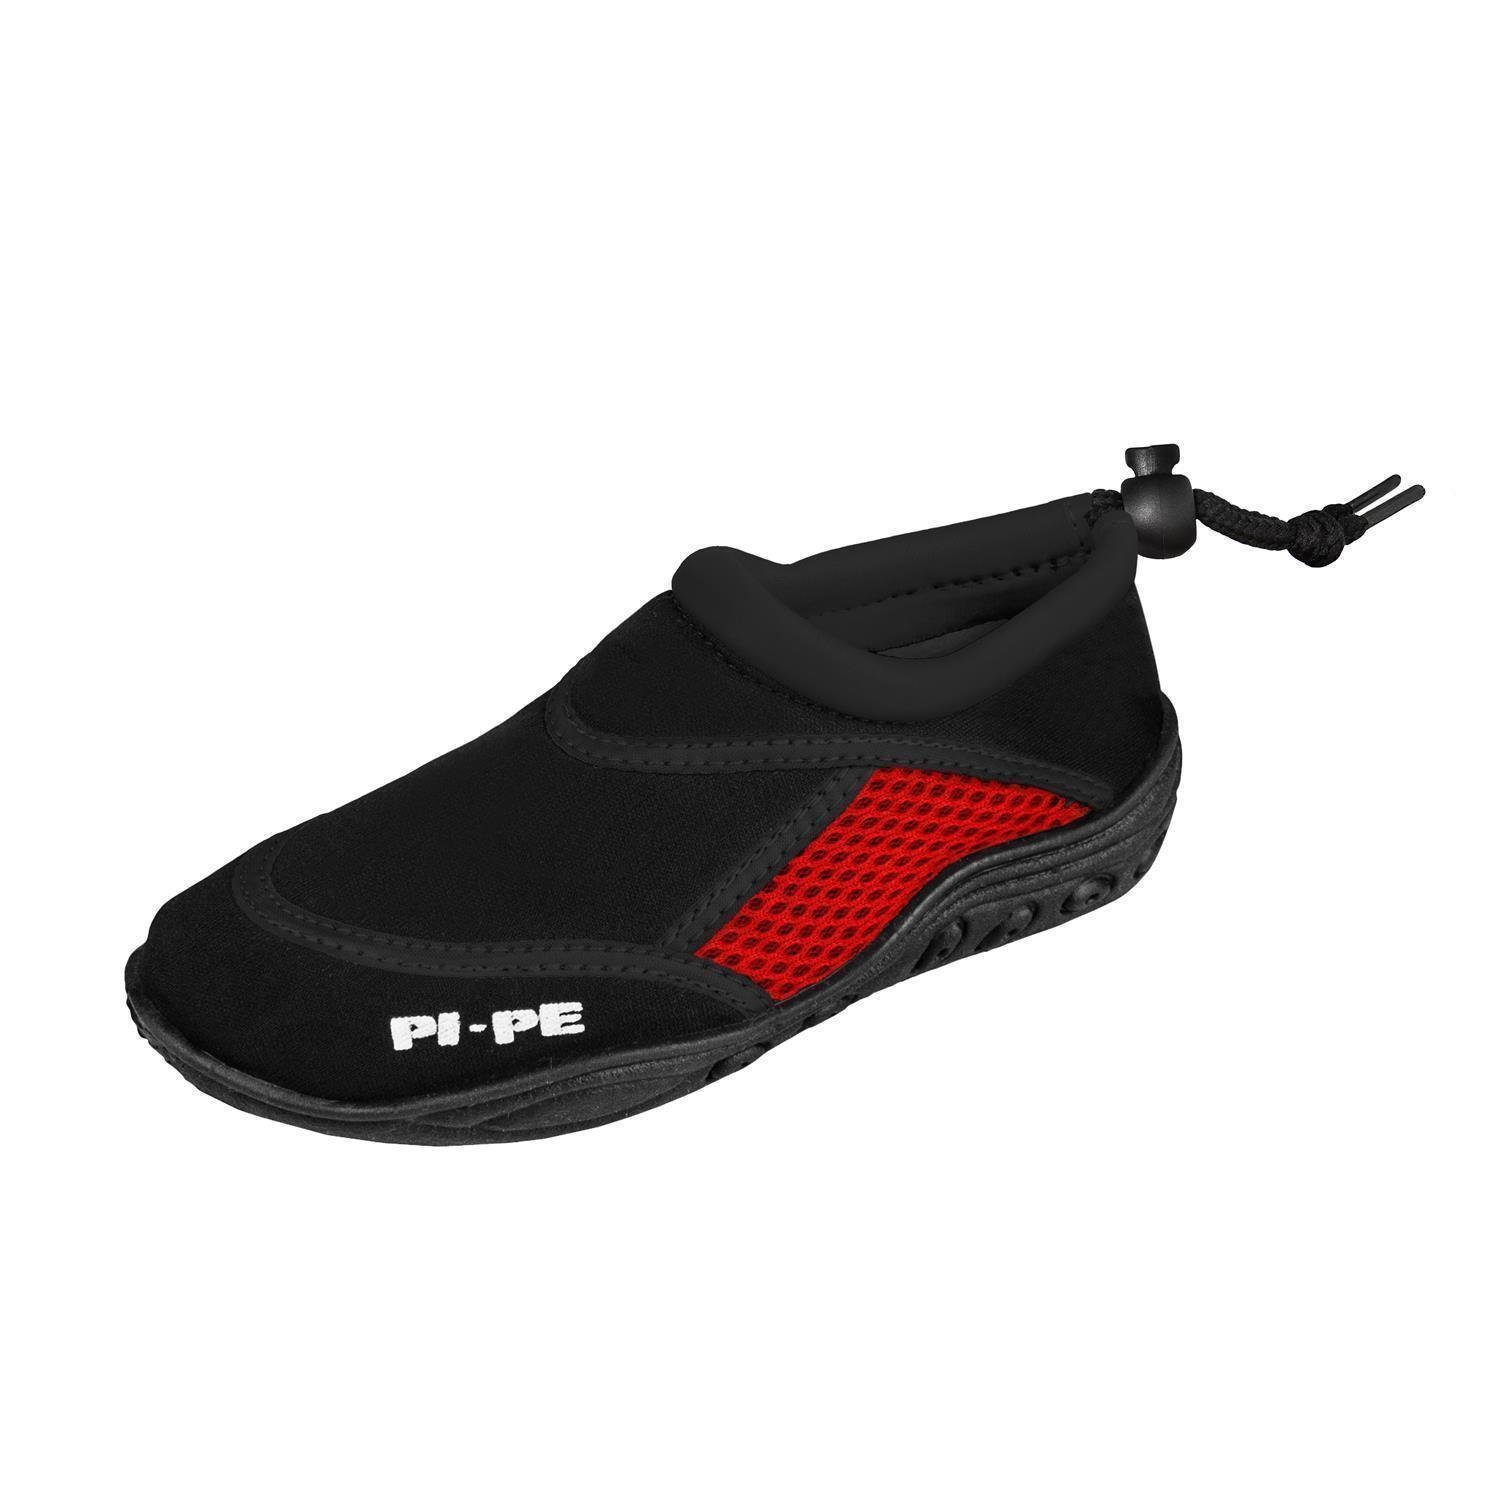 Aqua PI-PE schwarz/rot Kinder Active PI-PE Badeschuh Badeschuh Junior Shoes